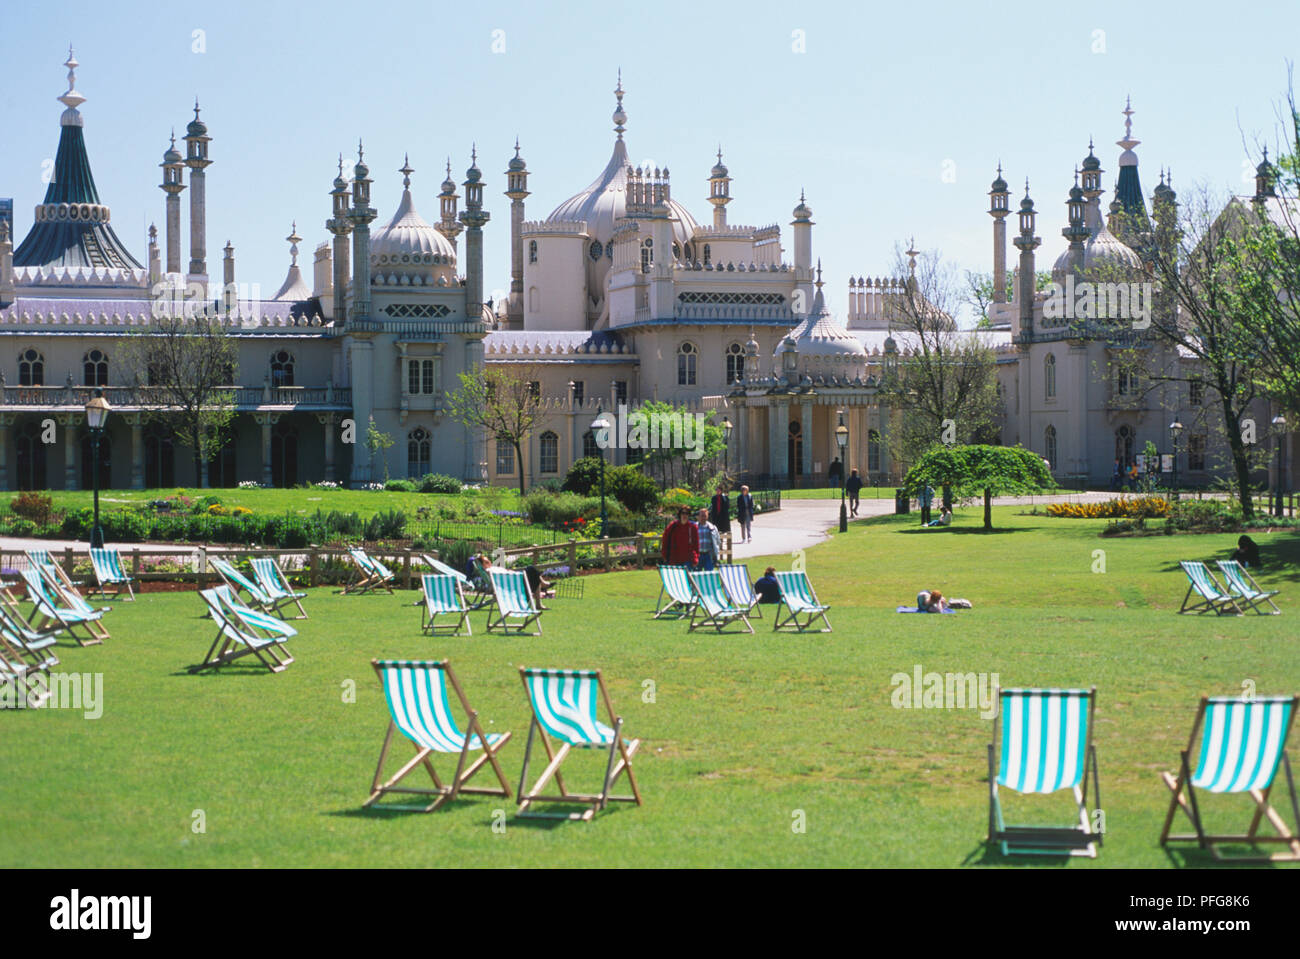 Great Britain, England, Brighton, Royal Pavilion, large building based on oriental themes. Stock Photo